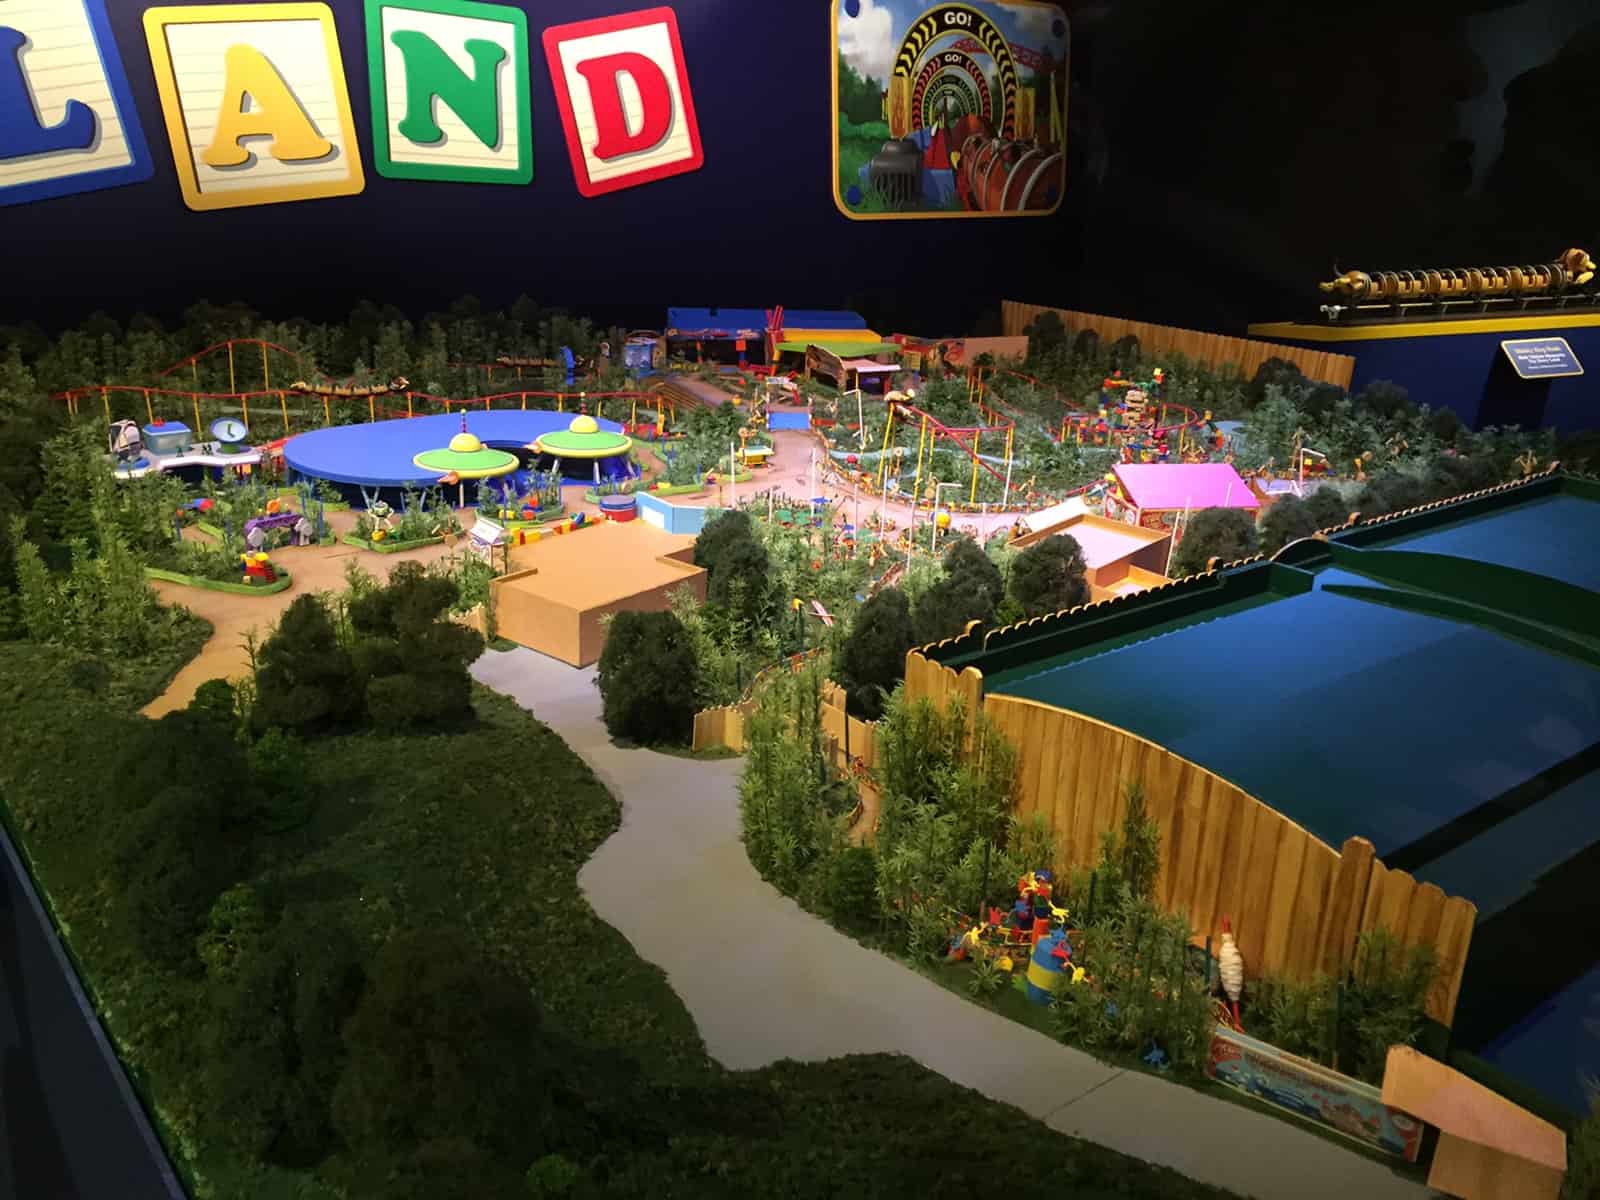 PHOTOS: Toy Story Land Model Debuts at Walt Disney Presents, Disney's Hollywood Studios